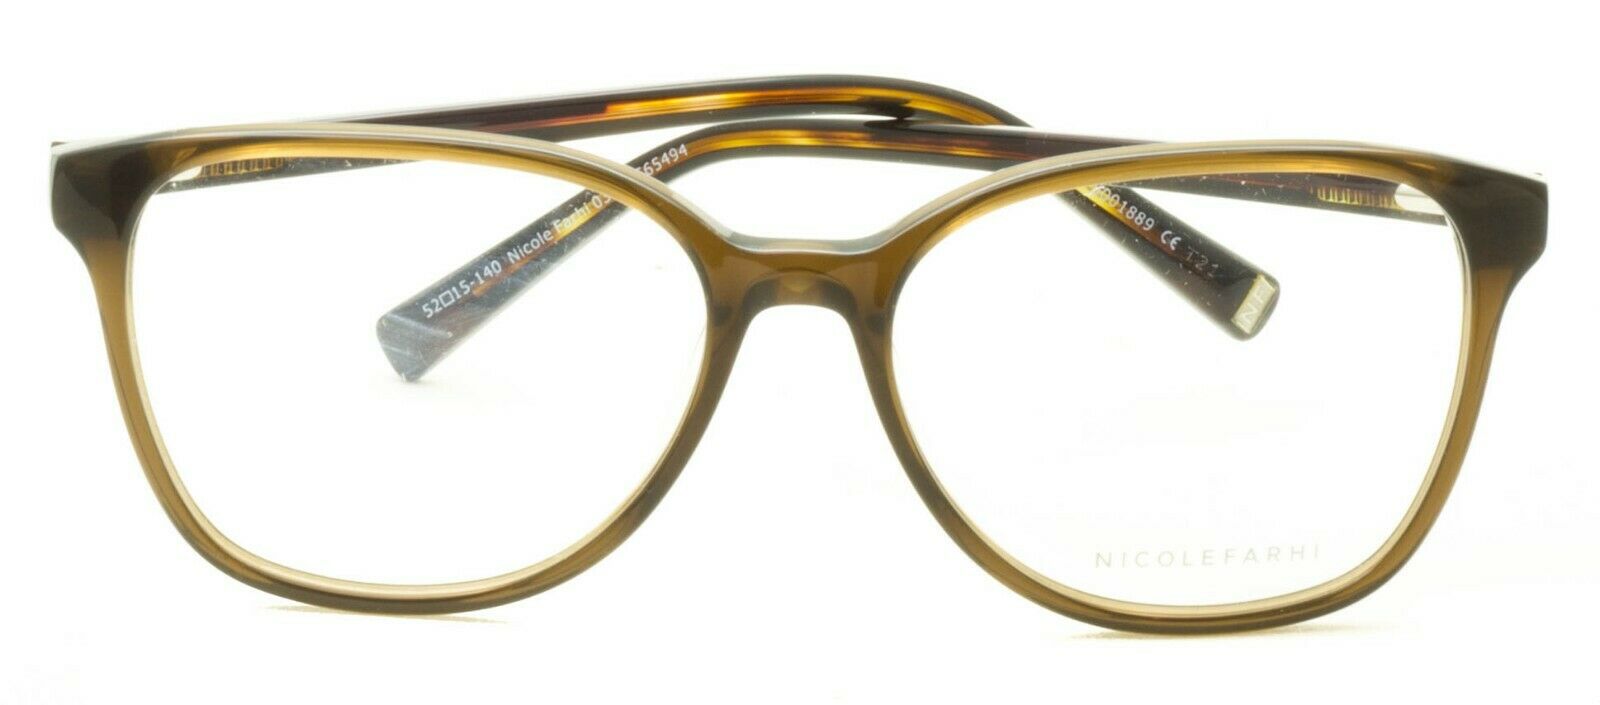 Nicole Farhi 03 30565494 52mm Eyewear Glasses RX Optical Eyeglasses FRAMES - New